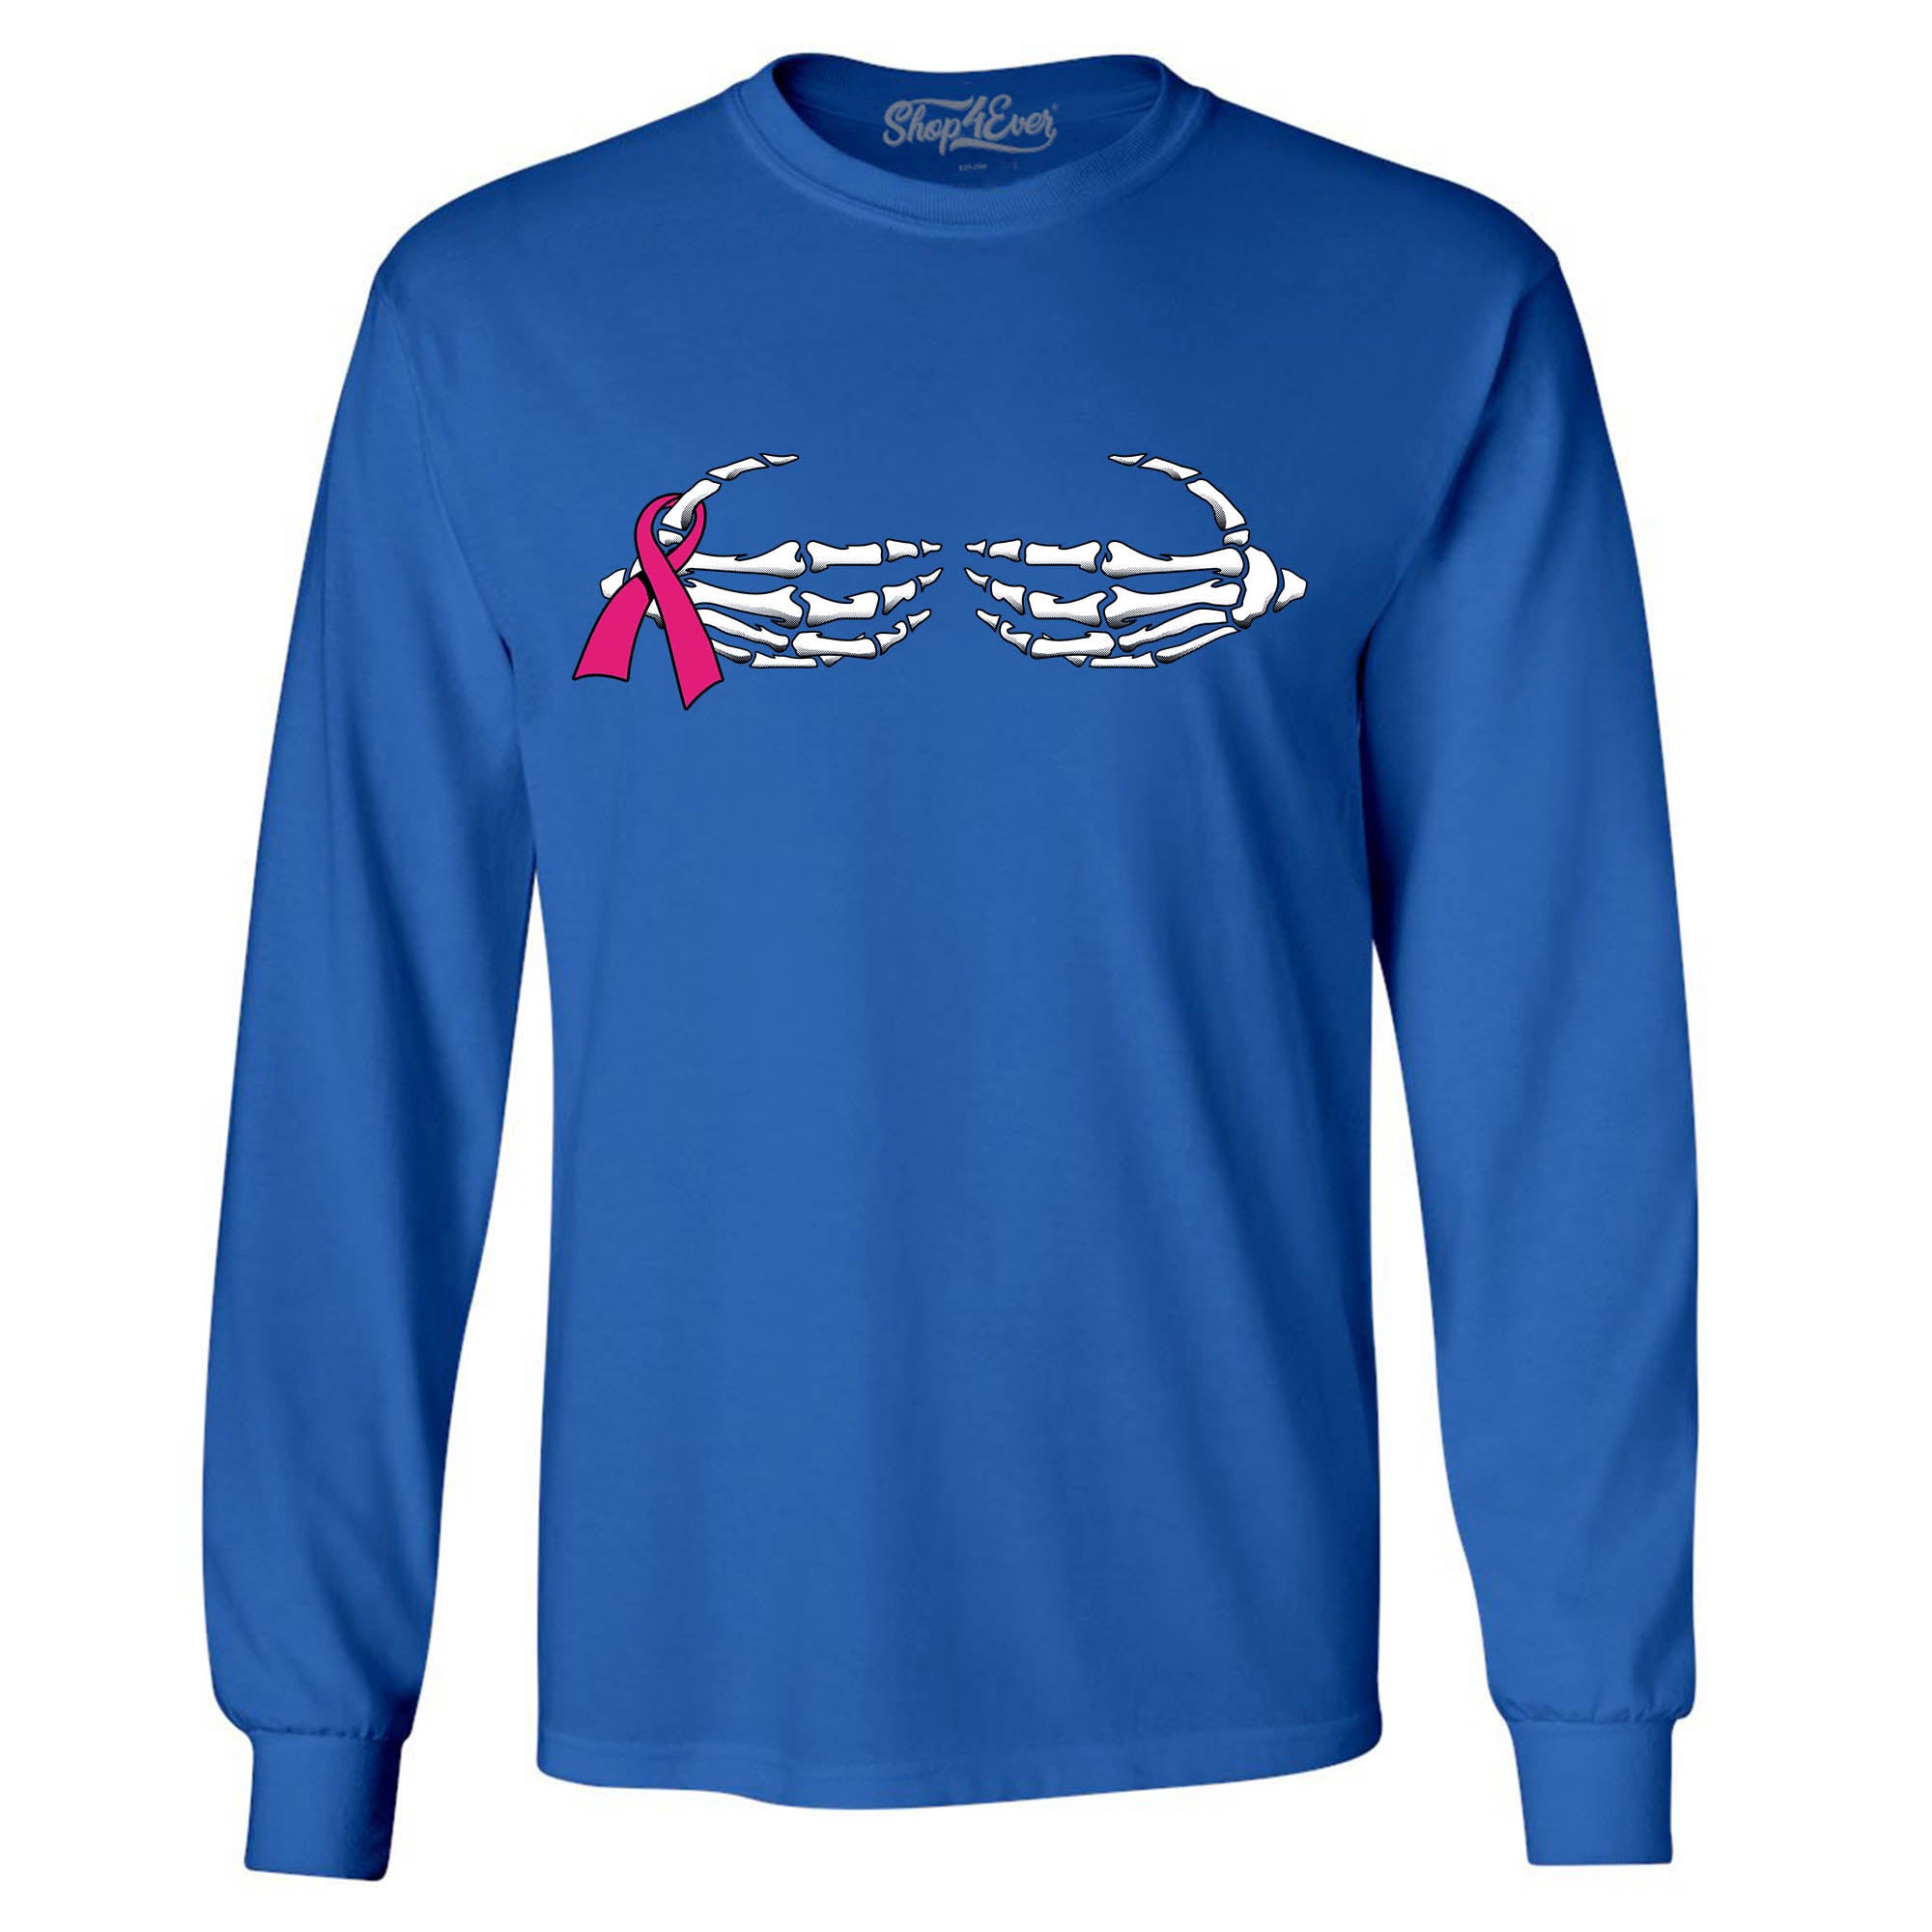 Skeleton Hands Long Sleeve Shirt Breast Cancer Awareness Shirts